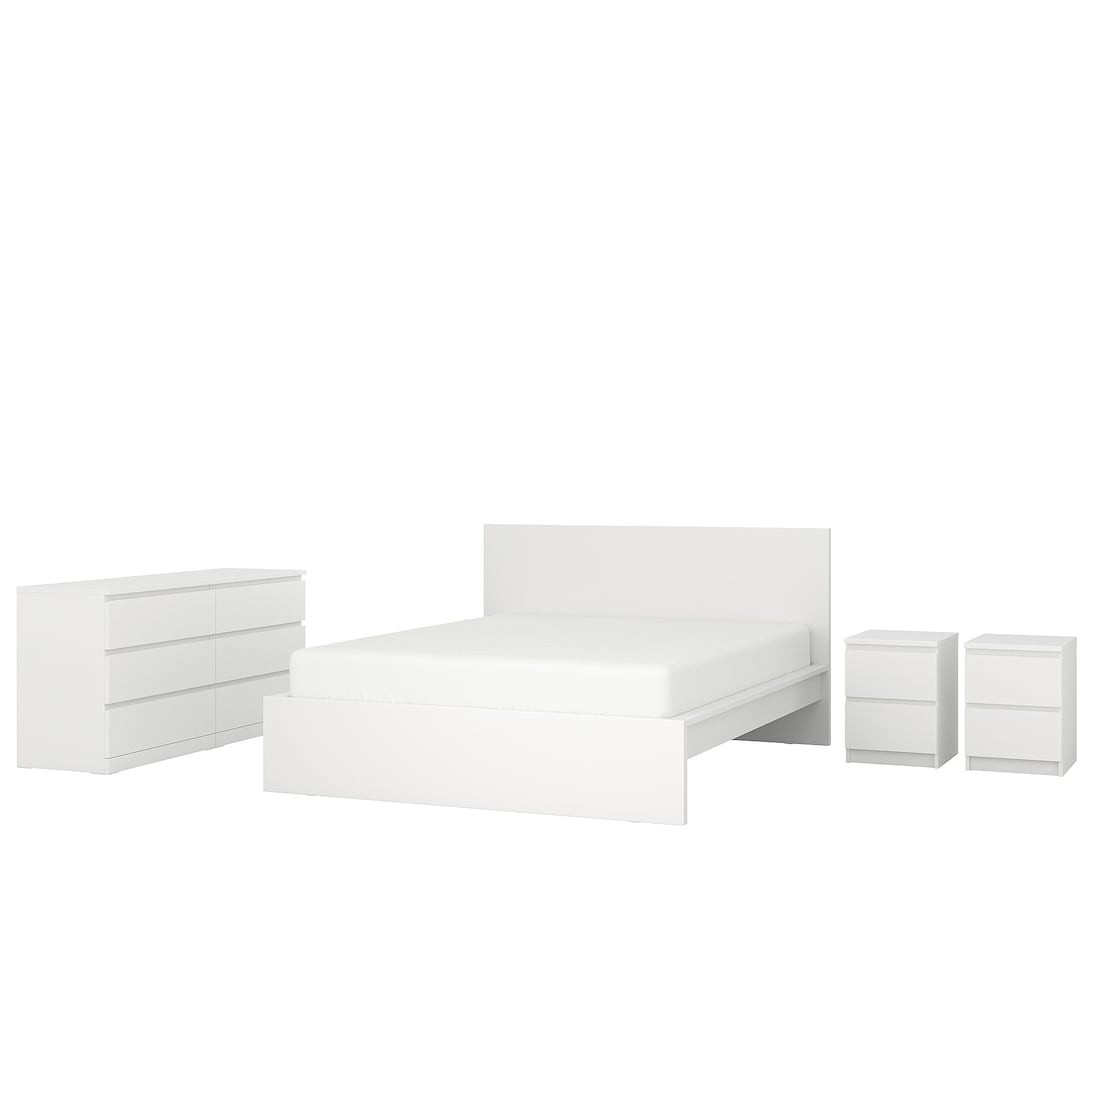 MALM МАЛЬМ Набор мебели для спальни 4 шт, белый, 180x200 см